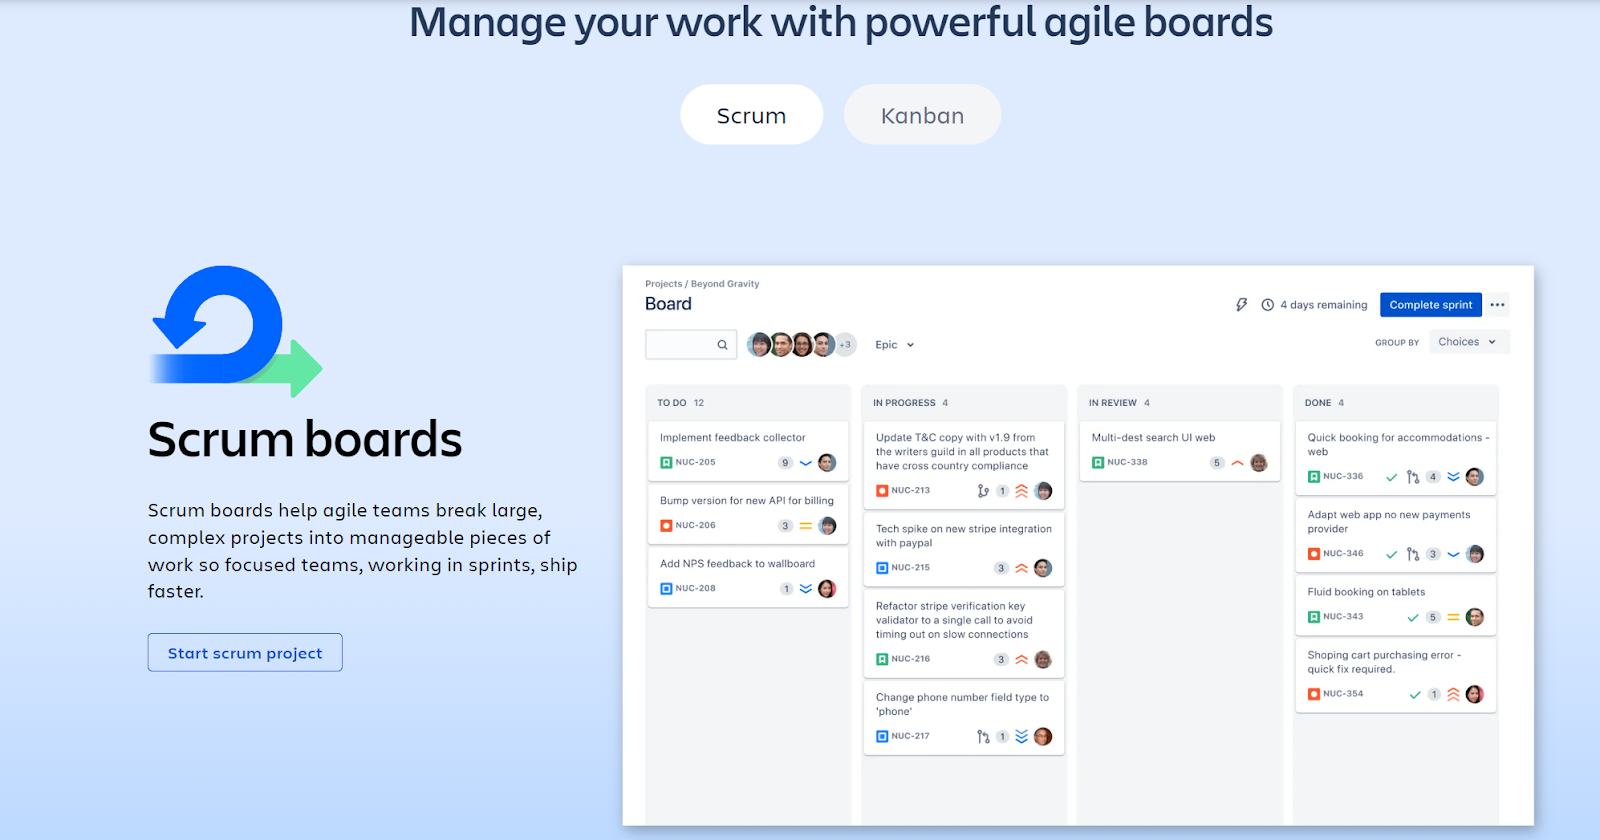 jira agile tool to manage the work